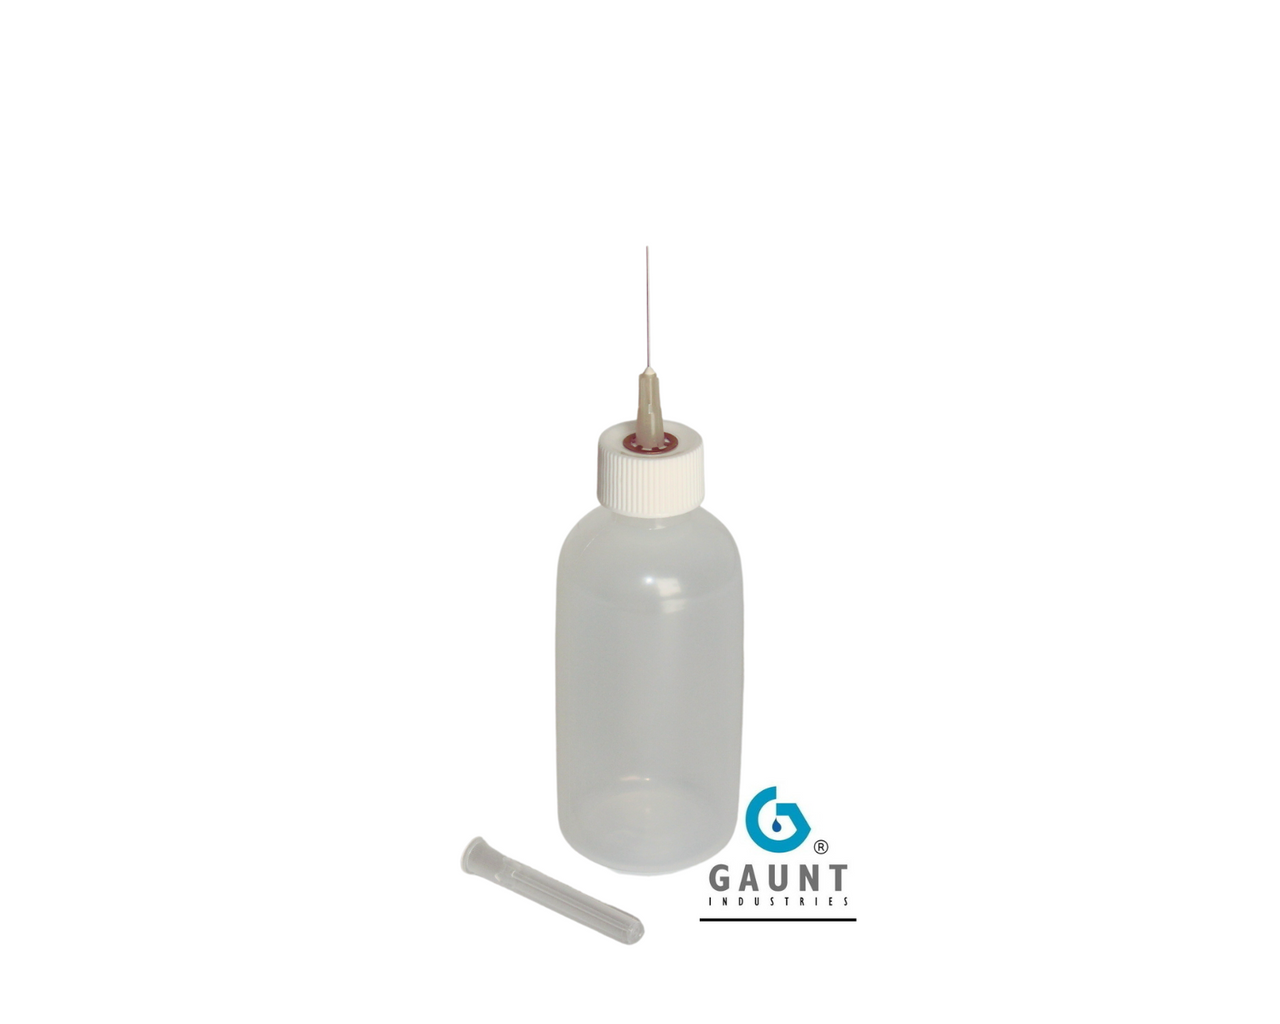 HYPO-4905*BLK*.5 Short needle Black Bottle glue dispenser - Gaunt